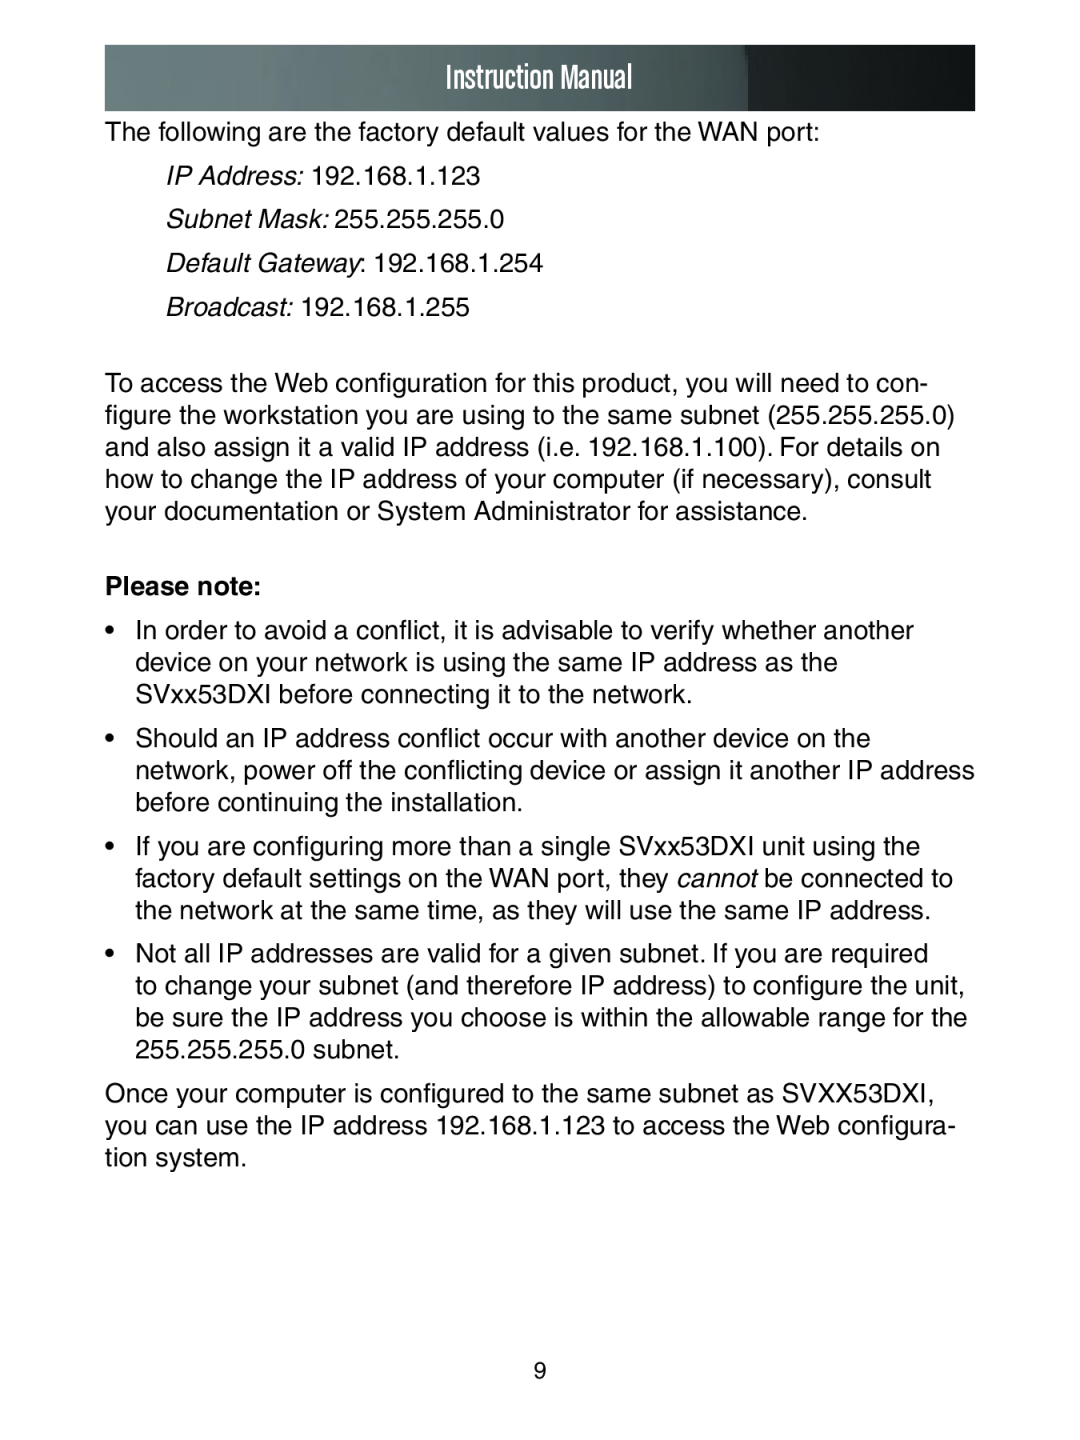 StarTech.com SV1653DXI, SV3253DXI manual Subnet Mask Default Gateway, Instruction Manual, Please note 